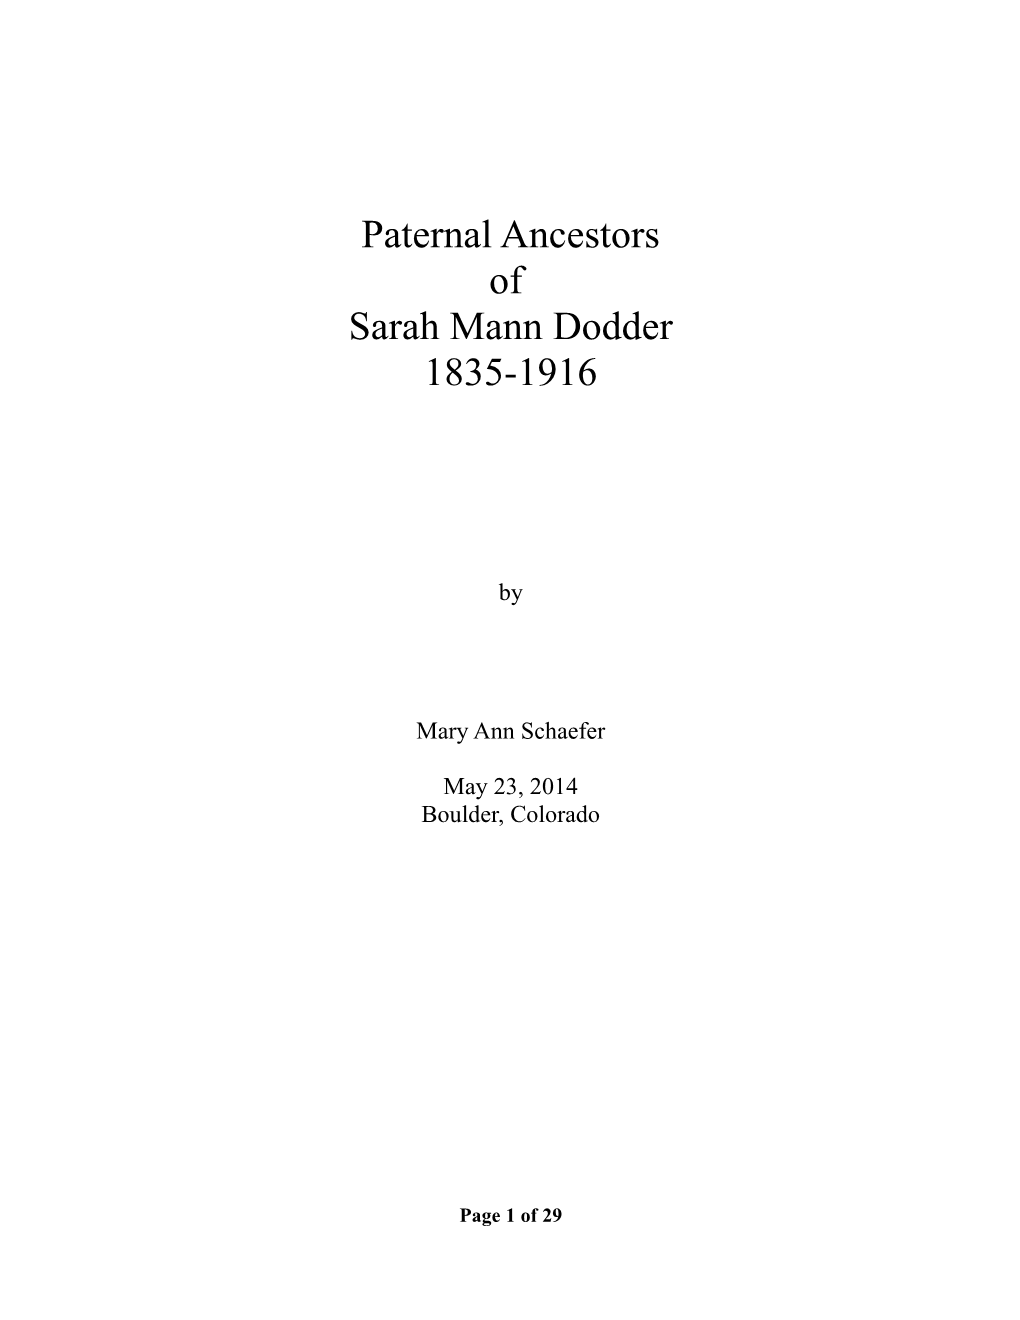 Paternal Ancestors of Sarah Mann Dodder 1835-1916